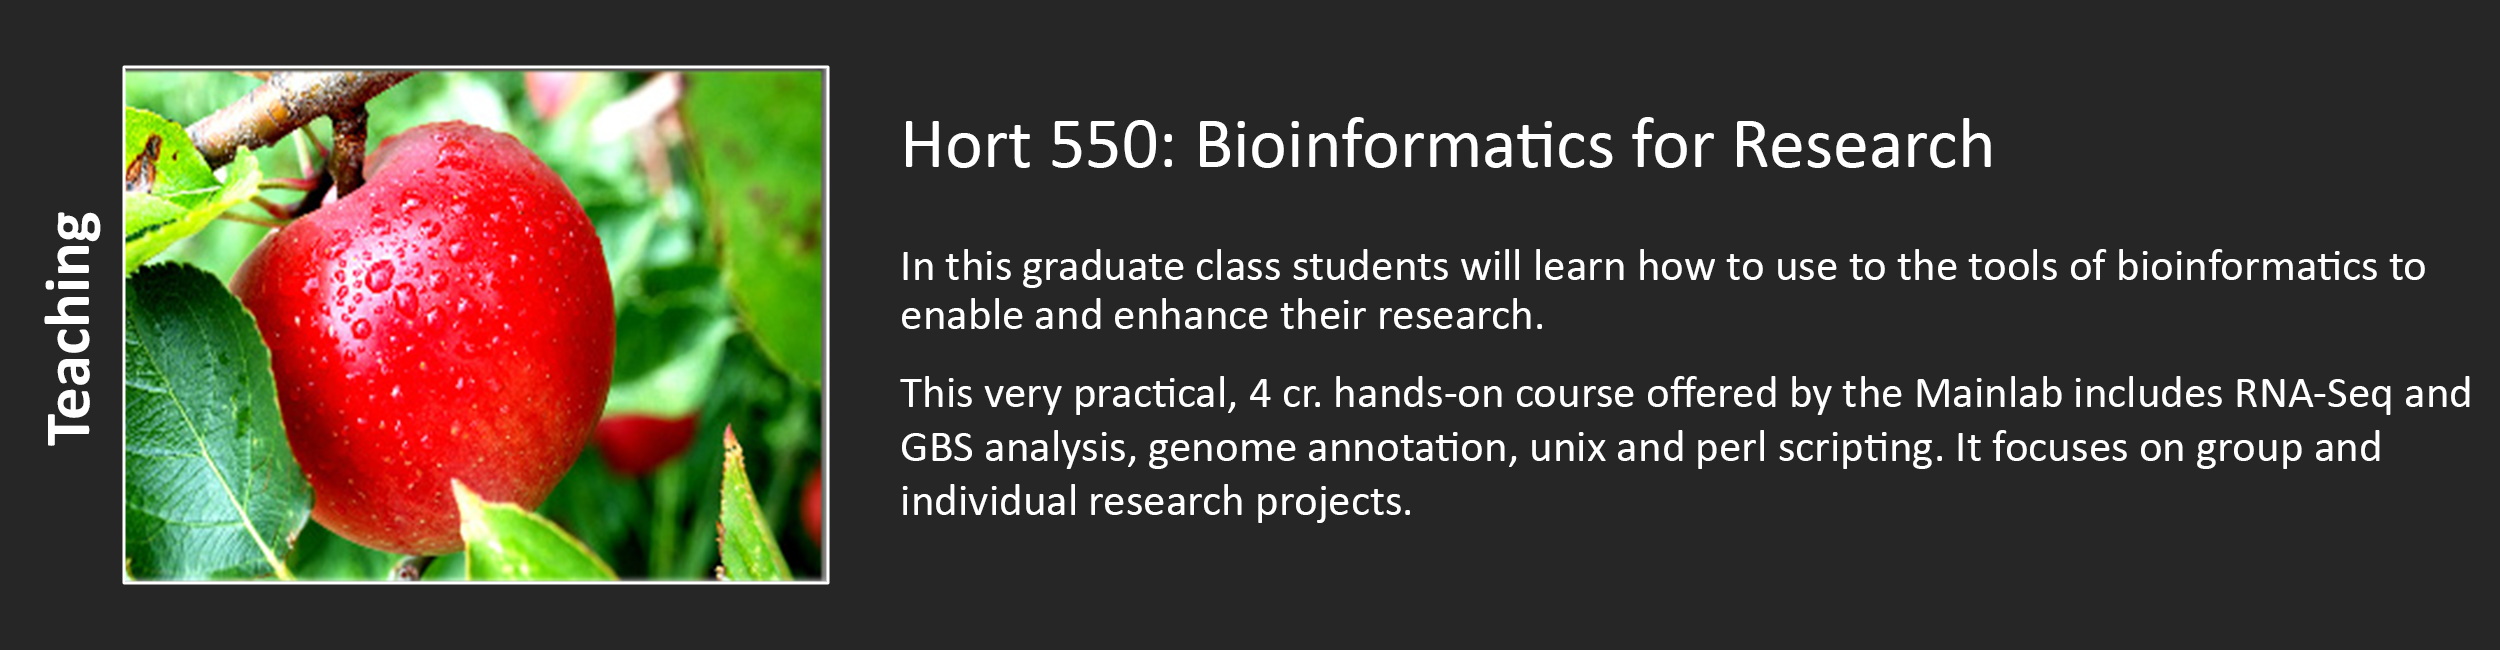 Hort 550 - Bioinformatics for Research